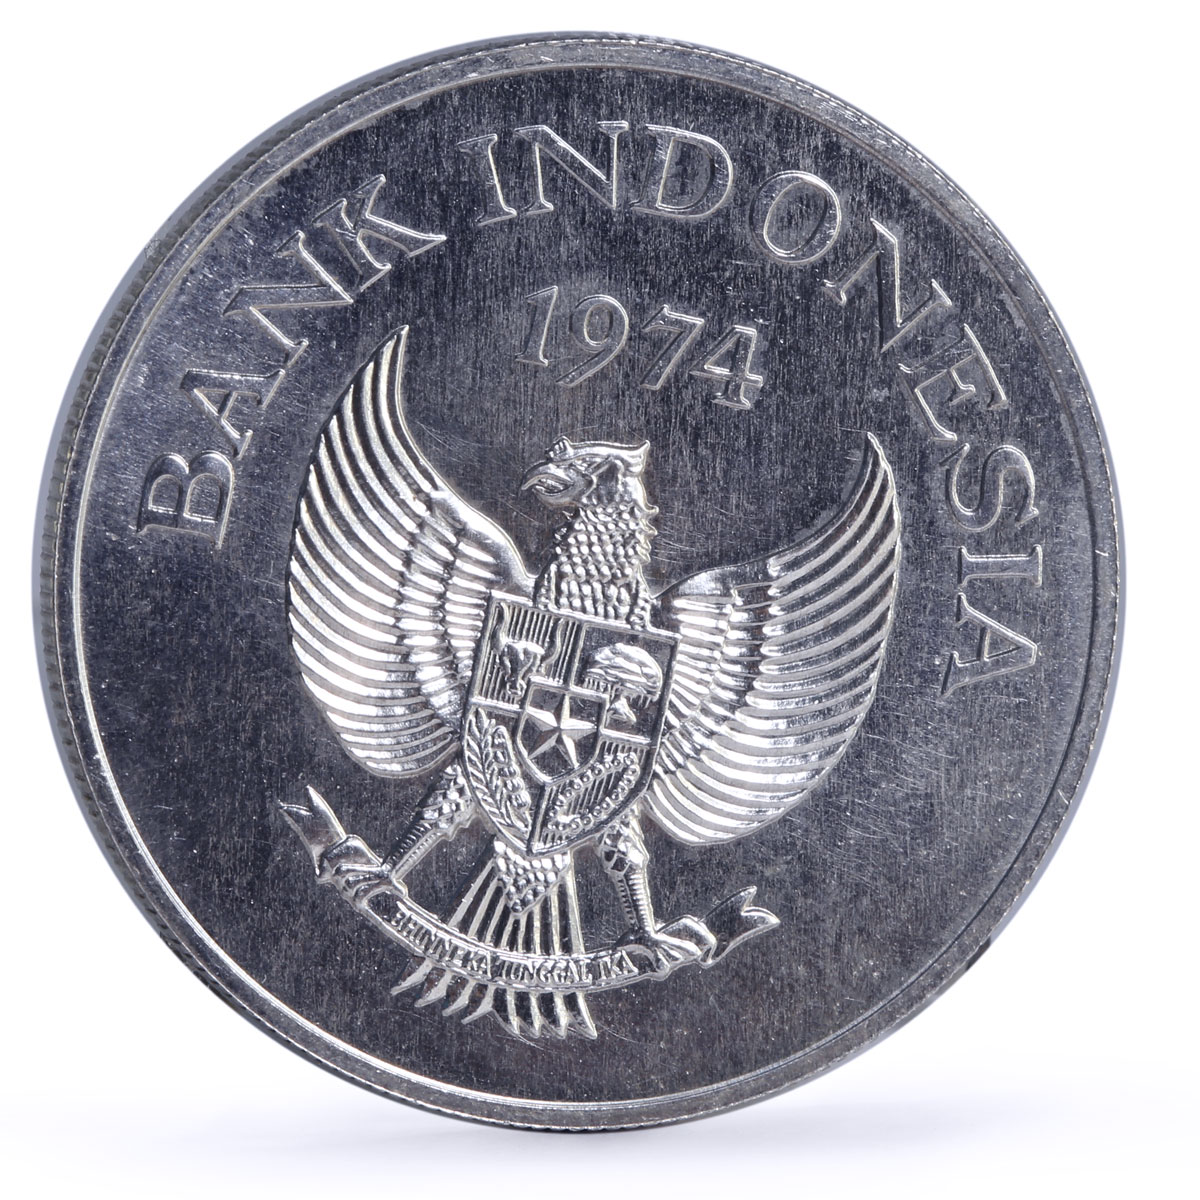 Indonesia 2000 rupiah Conservation Wildlife Javan Tiger Fauna silver coin 1974